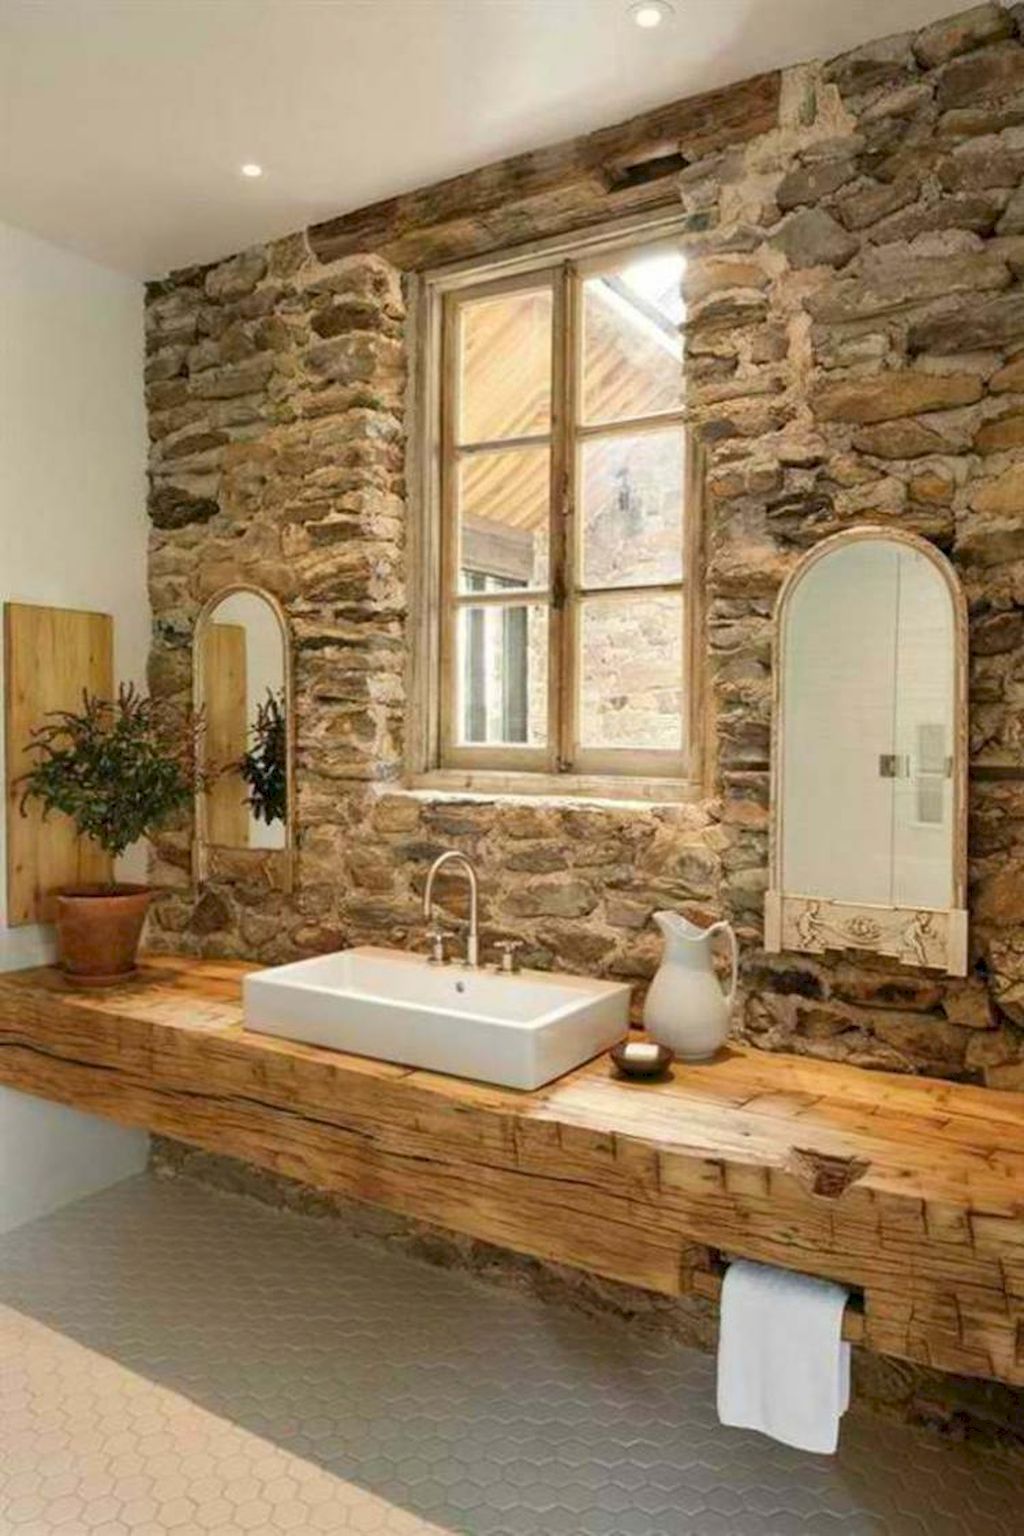 Rustic bathroom farmhouse style design